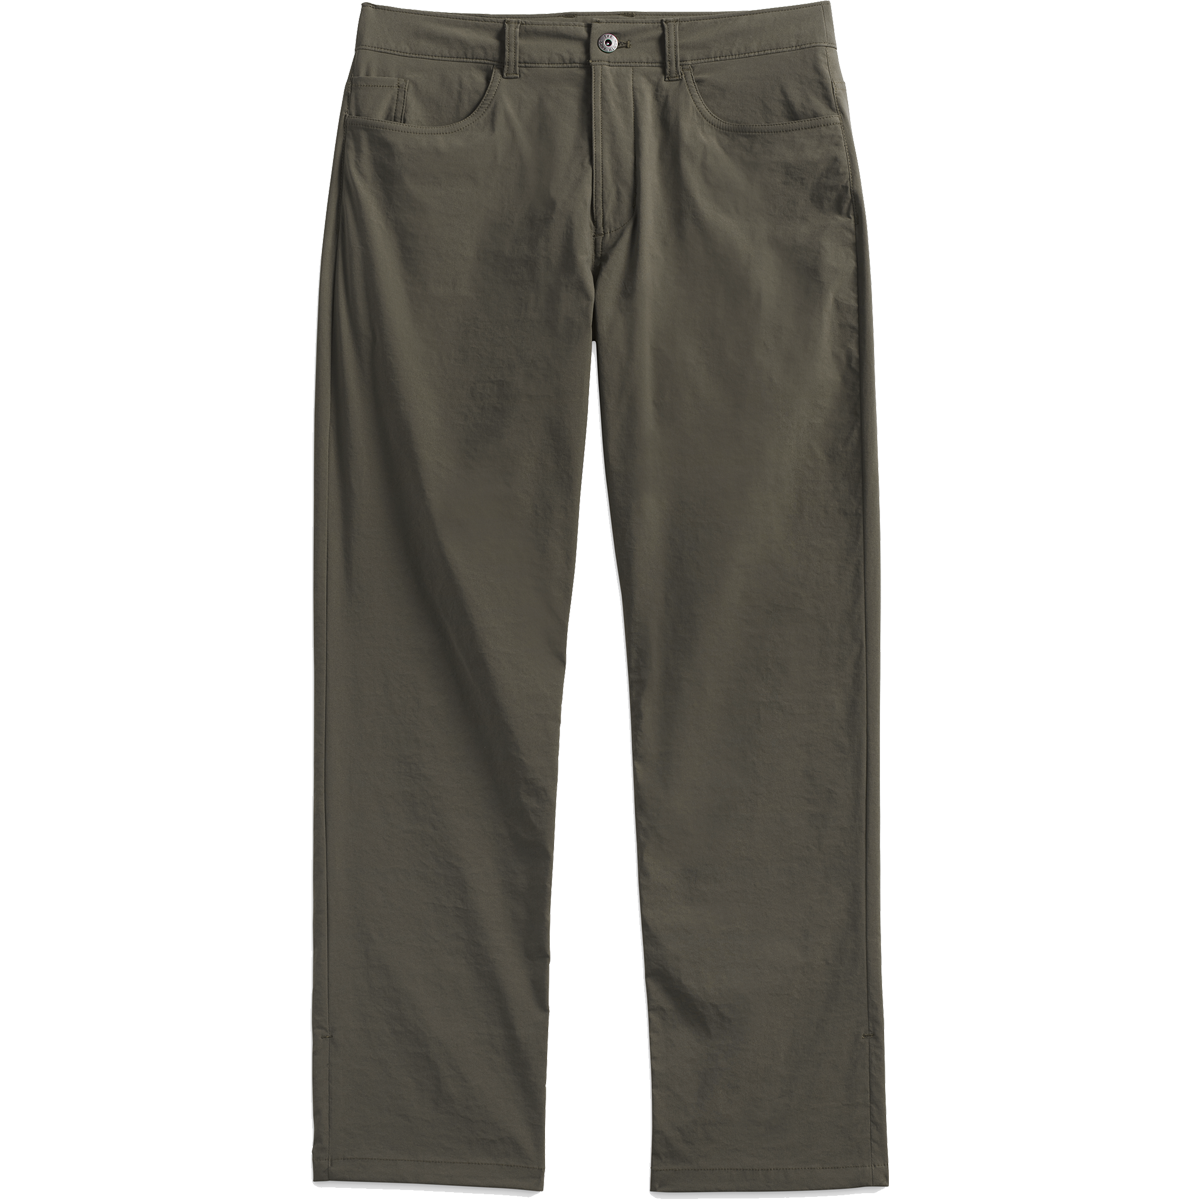 Sprag 5-Pocket Pant - Short alternate view